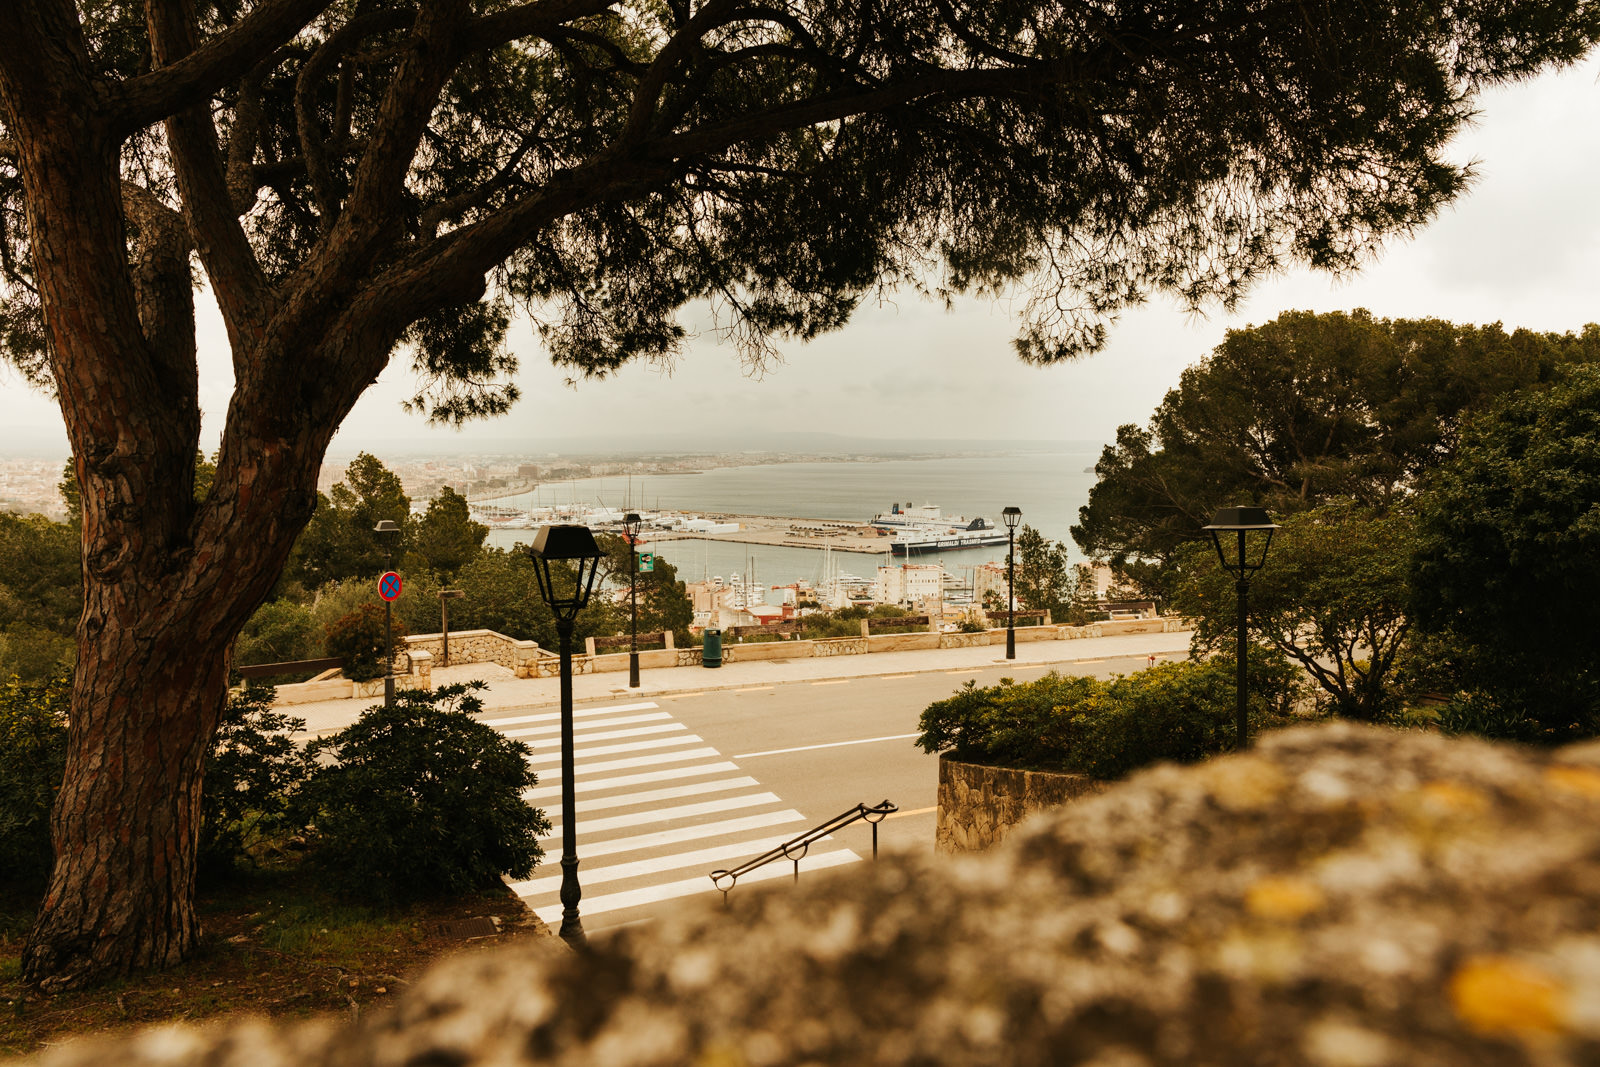 Blick auf den Hafen von Palma de Mallorca